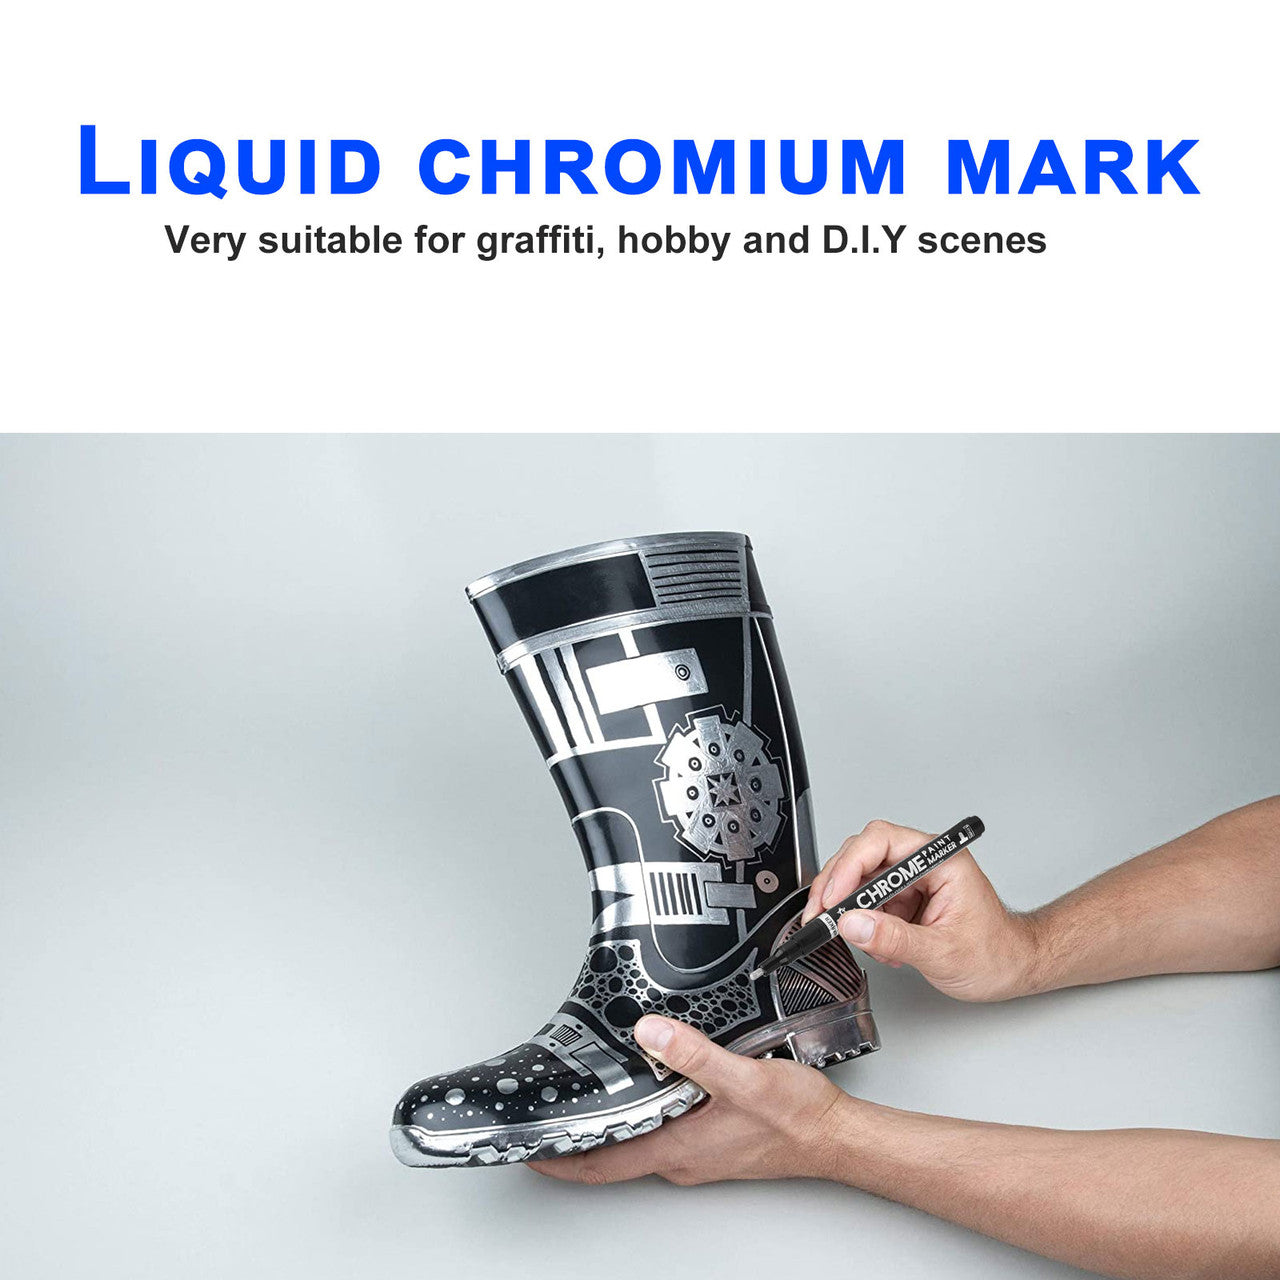 Liquid Chrome Pump Marker for DIY, Make Up, Model Building and more, 1mm